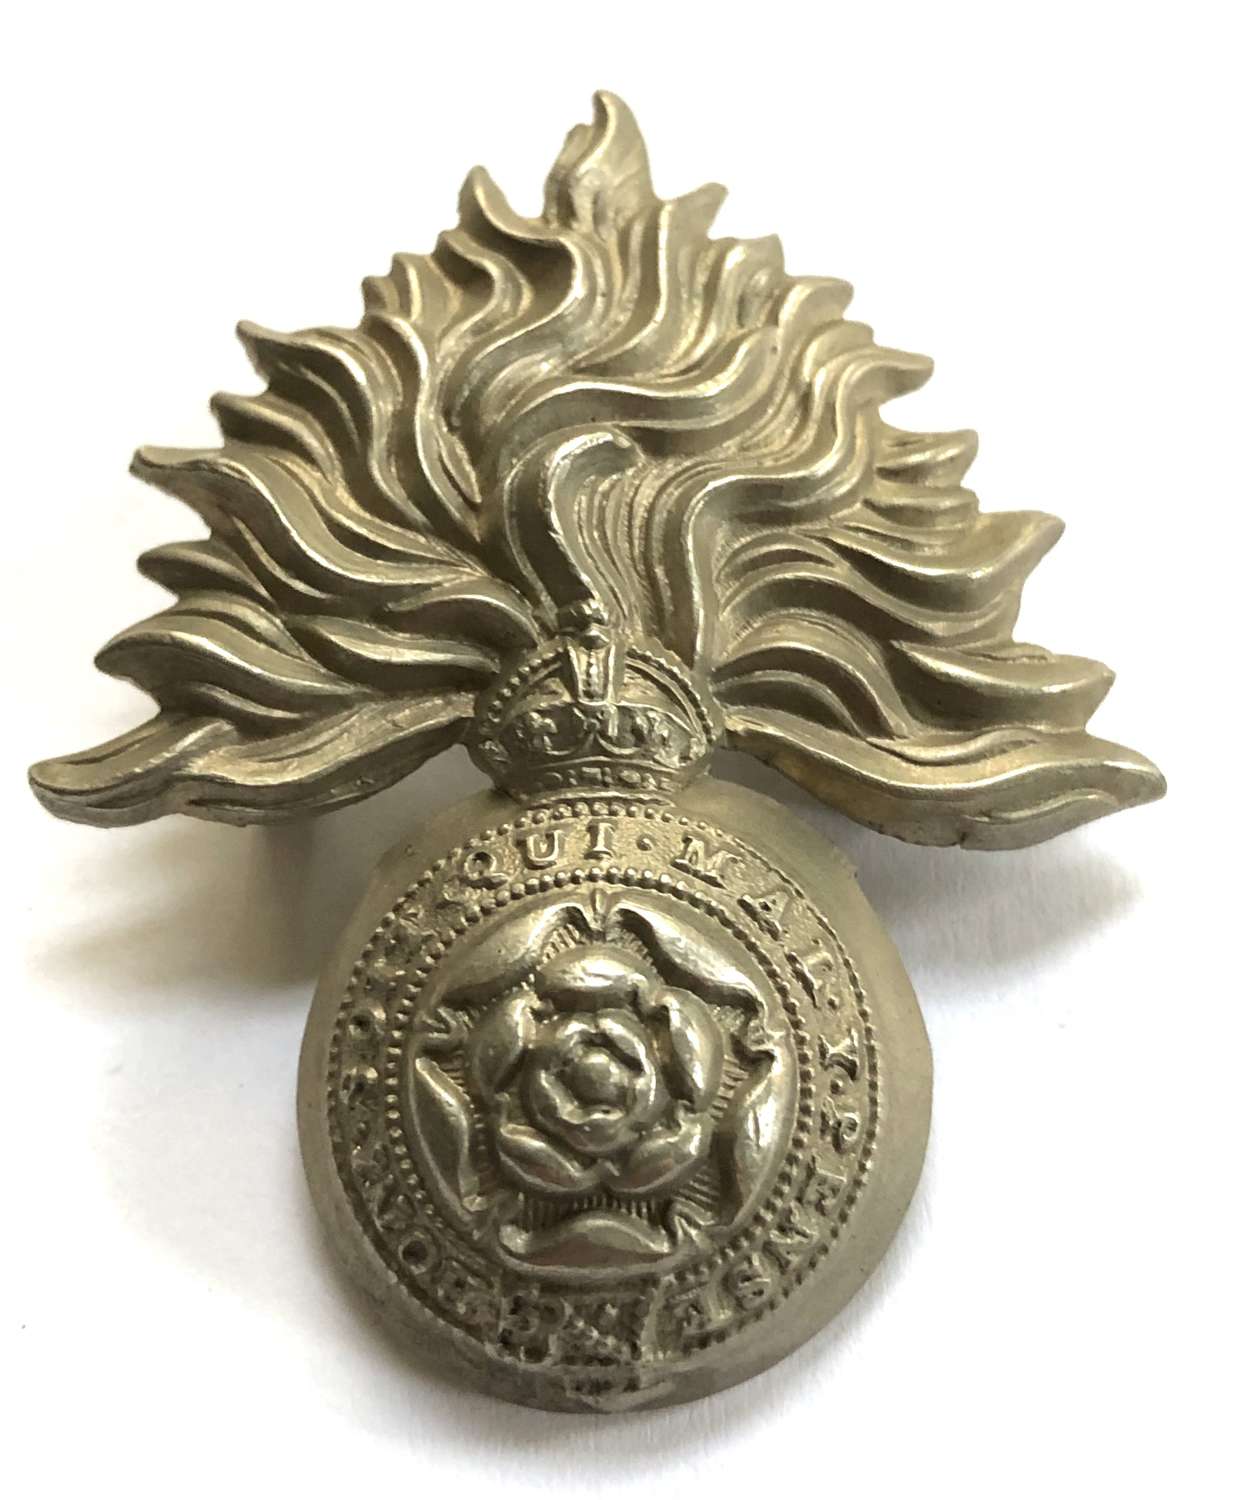 VB Royal Fusiliers (City of London Regiment) Edwardian cap badge